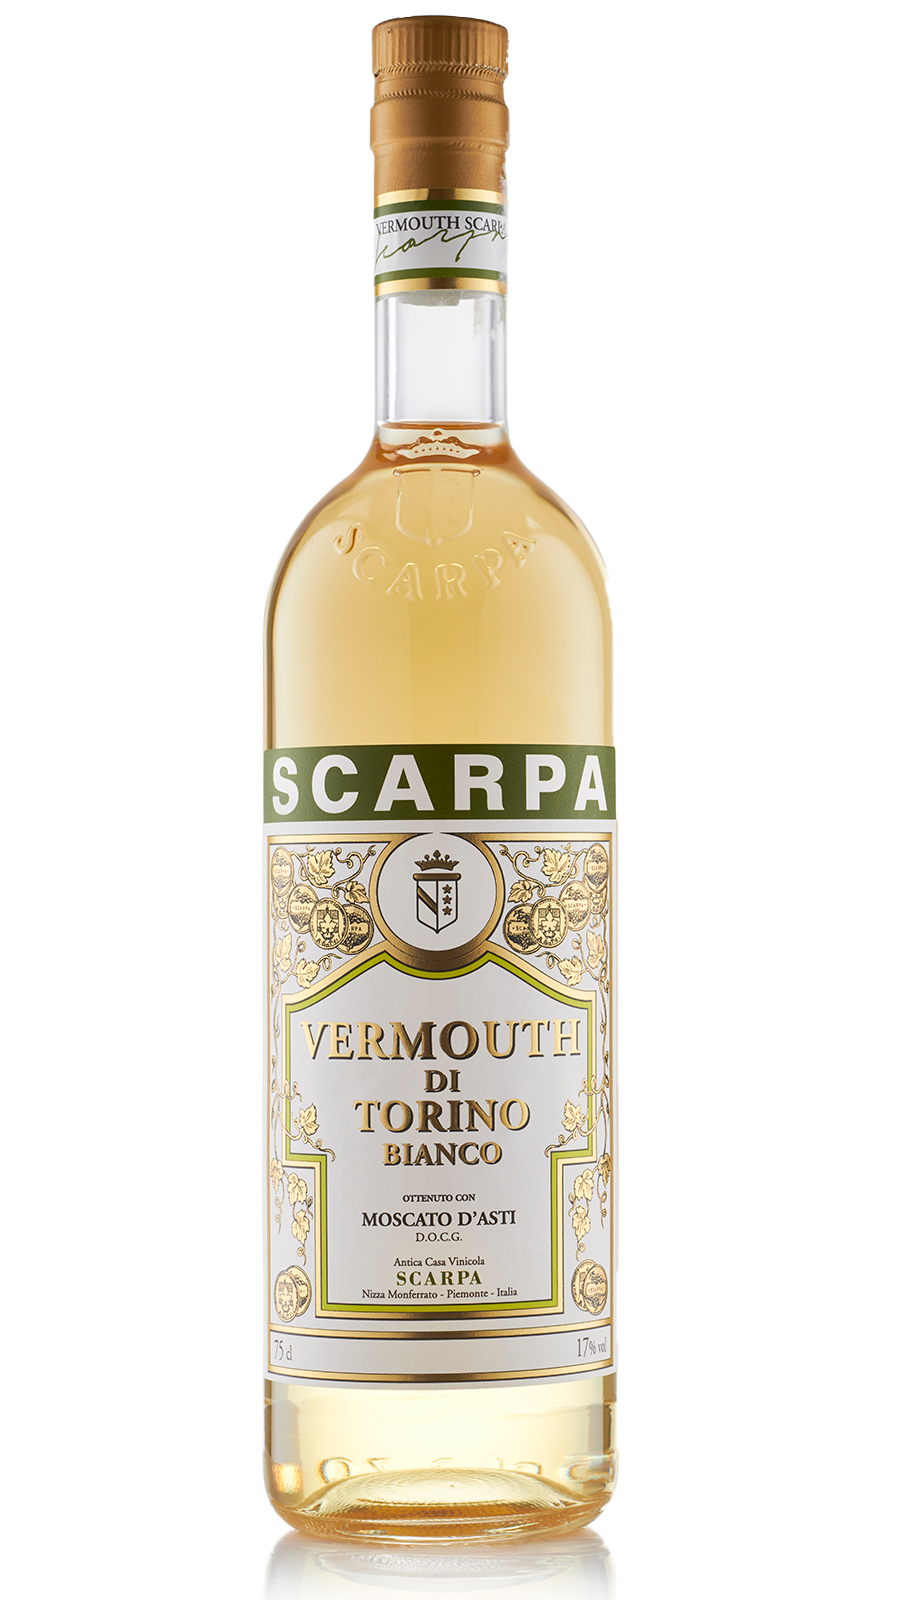 Vermouth di Torino Bianco